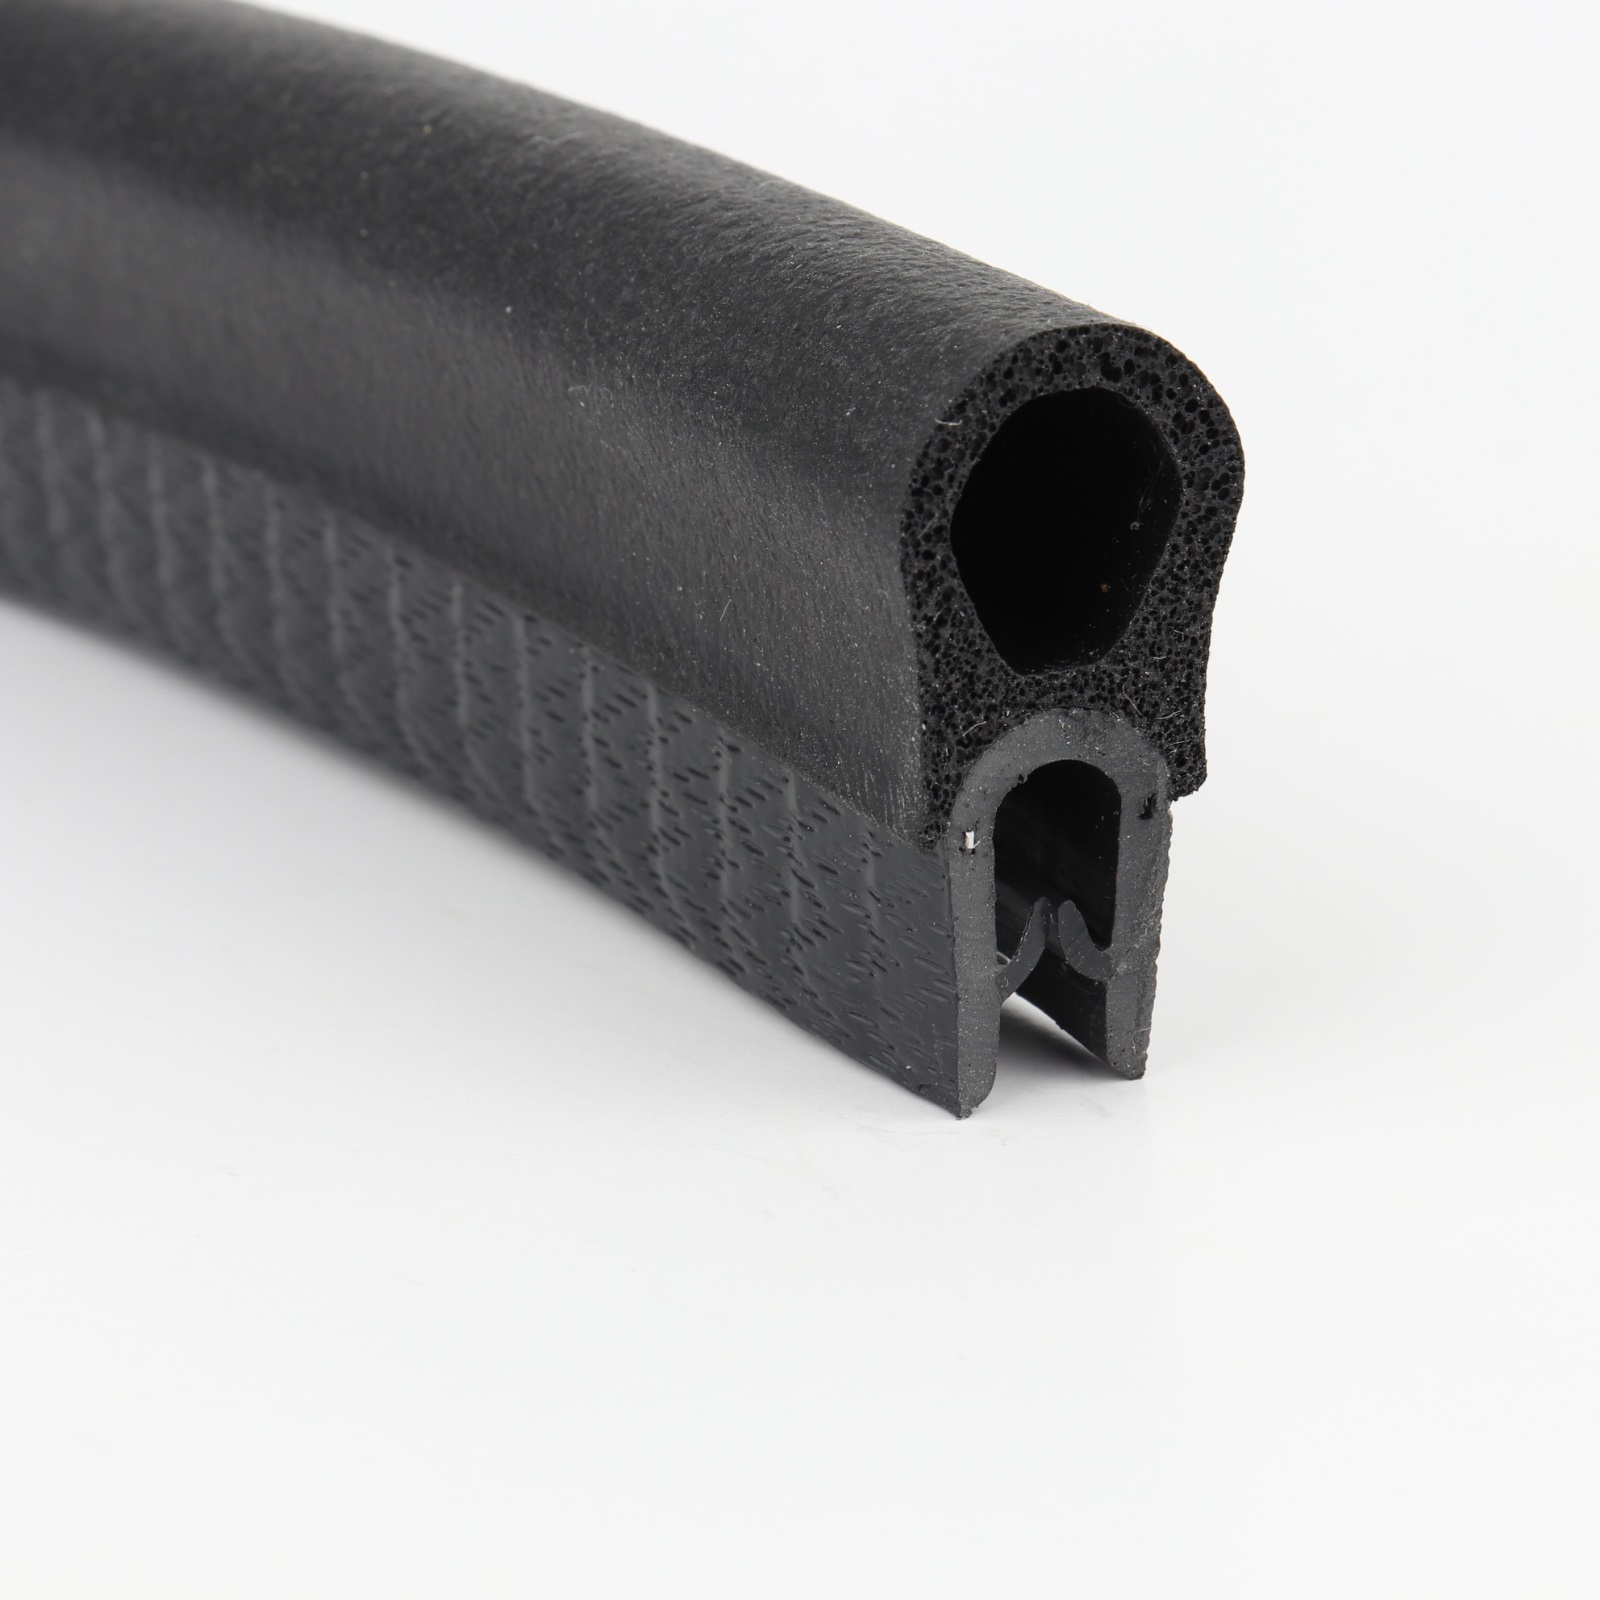 Kantenschutz-Dichtprofil - PVC/EPDM - mit Dichtung oben - Klemmbereich 1-4mm